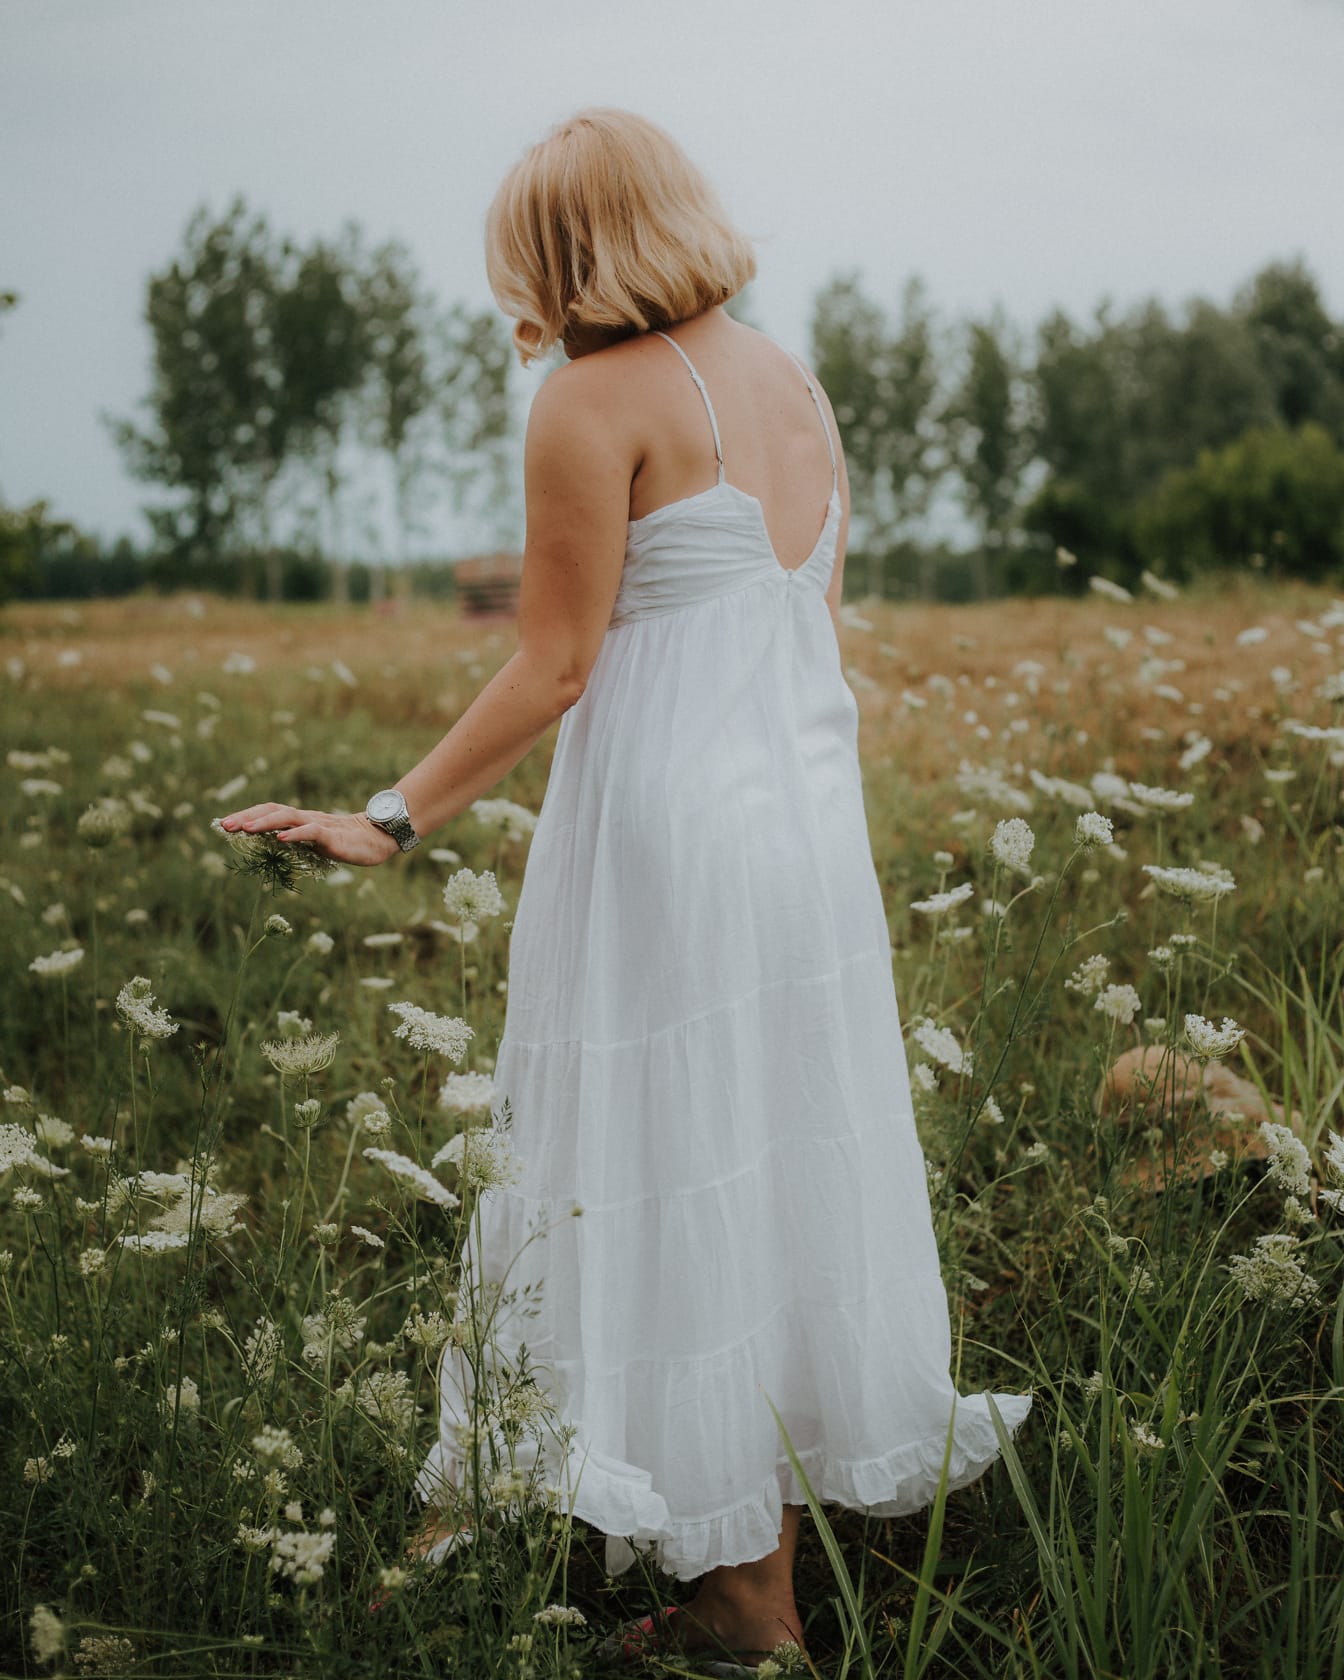 Wanita pirang di padang rumput mengenakan gaun putih